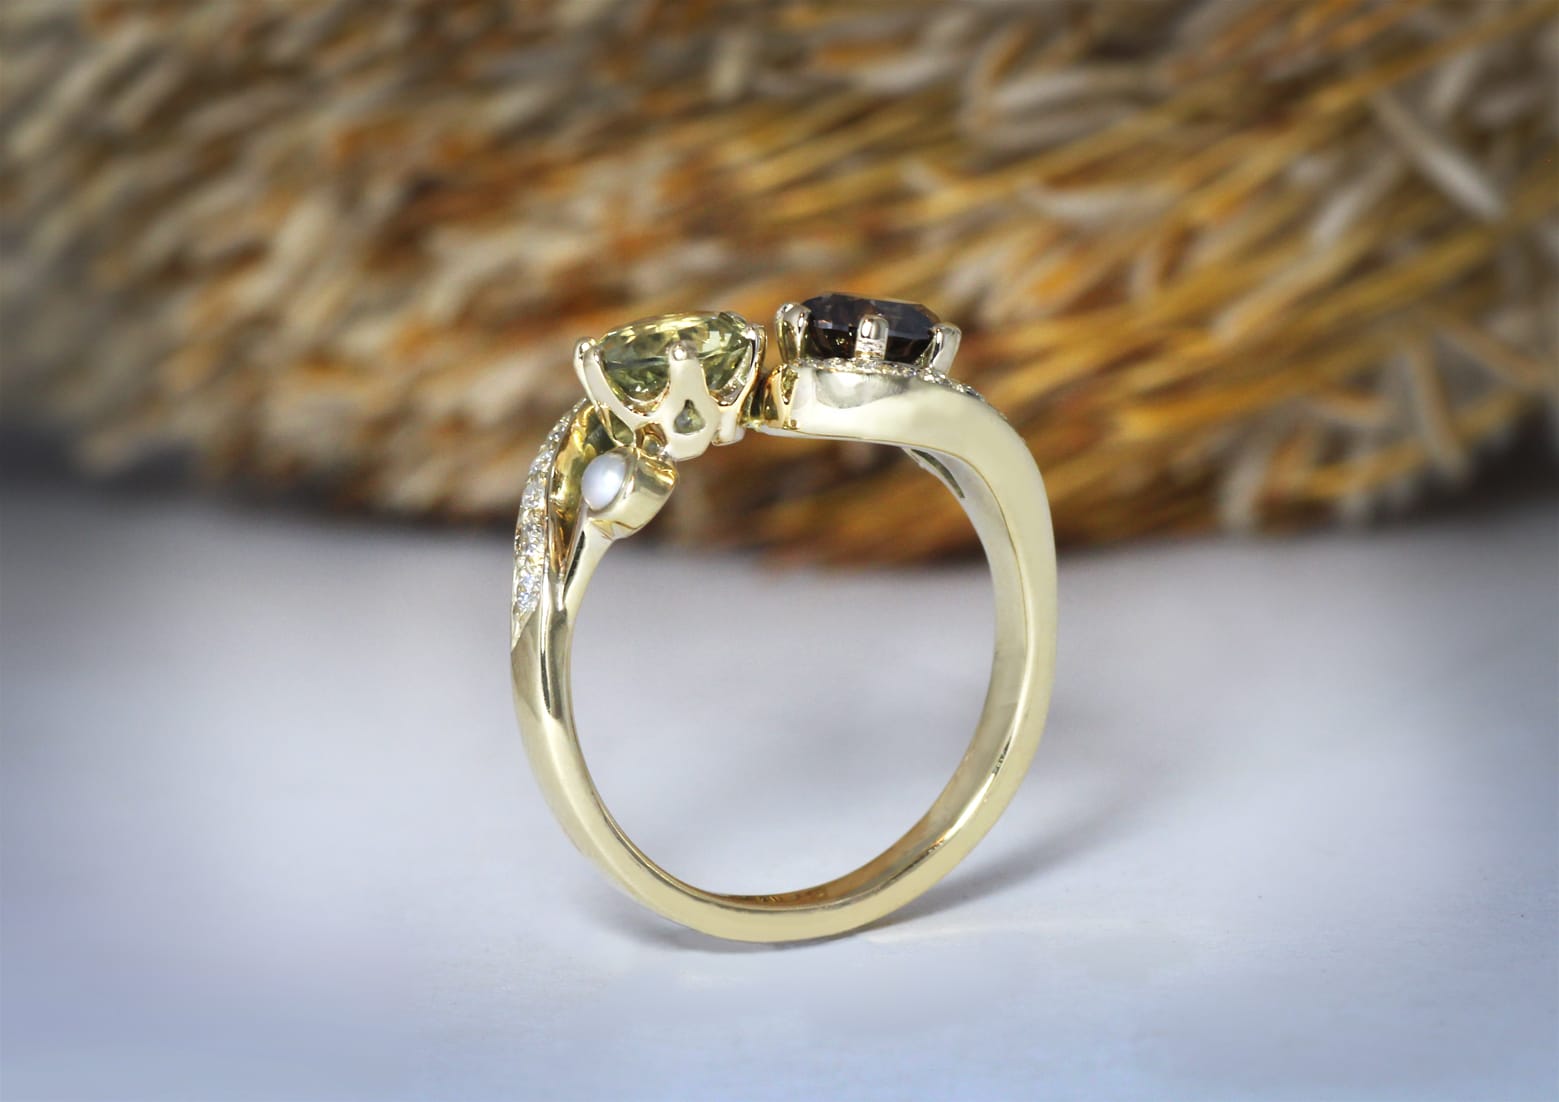 Sapphire, cognac diamond, pearls, diamonds in gold by Zoe Pook Jewellery